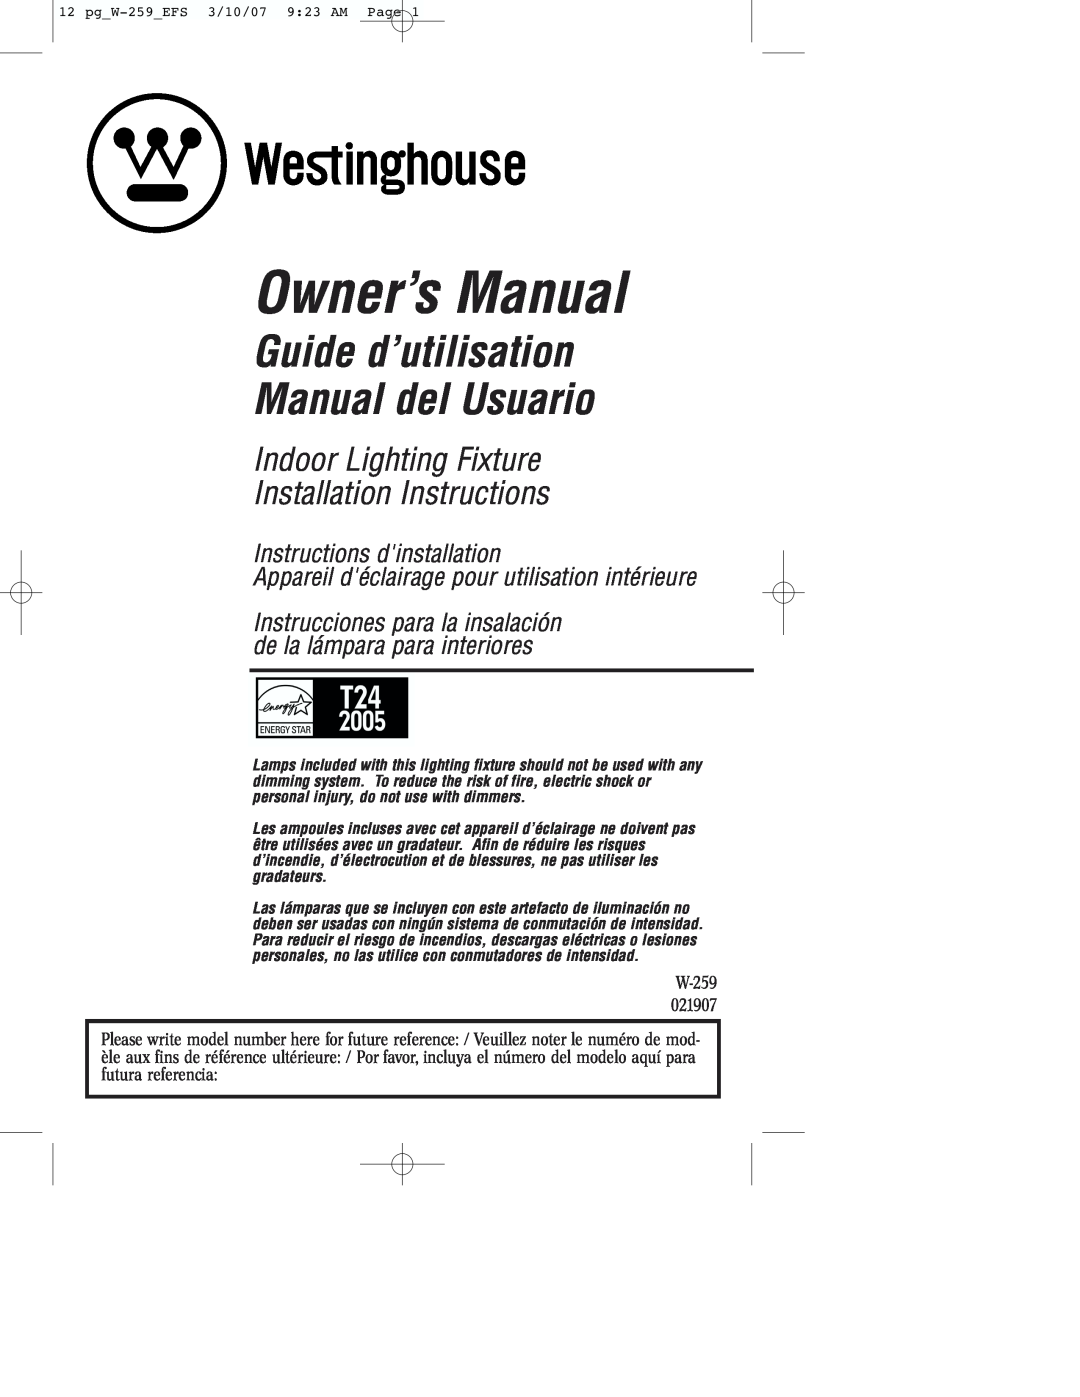 Westinghouse W-259 owner manual Guide d’utilisation Manual del Usuario, Indoor Lighting Fixture Installation Instructions 